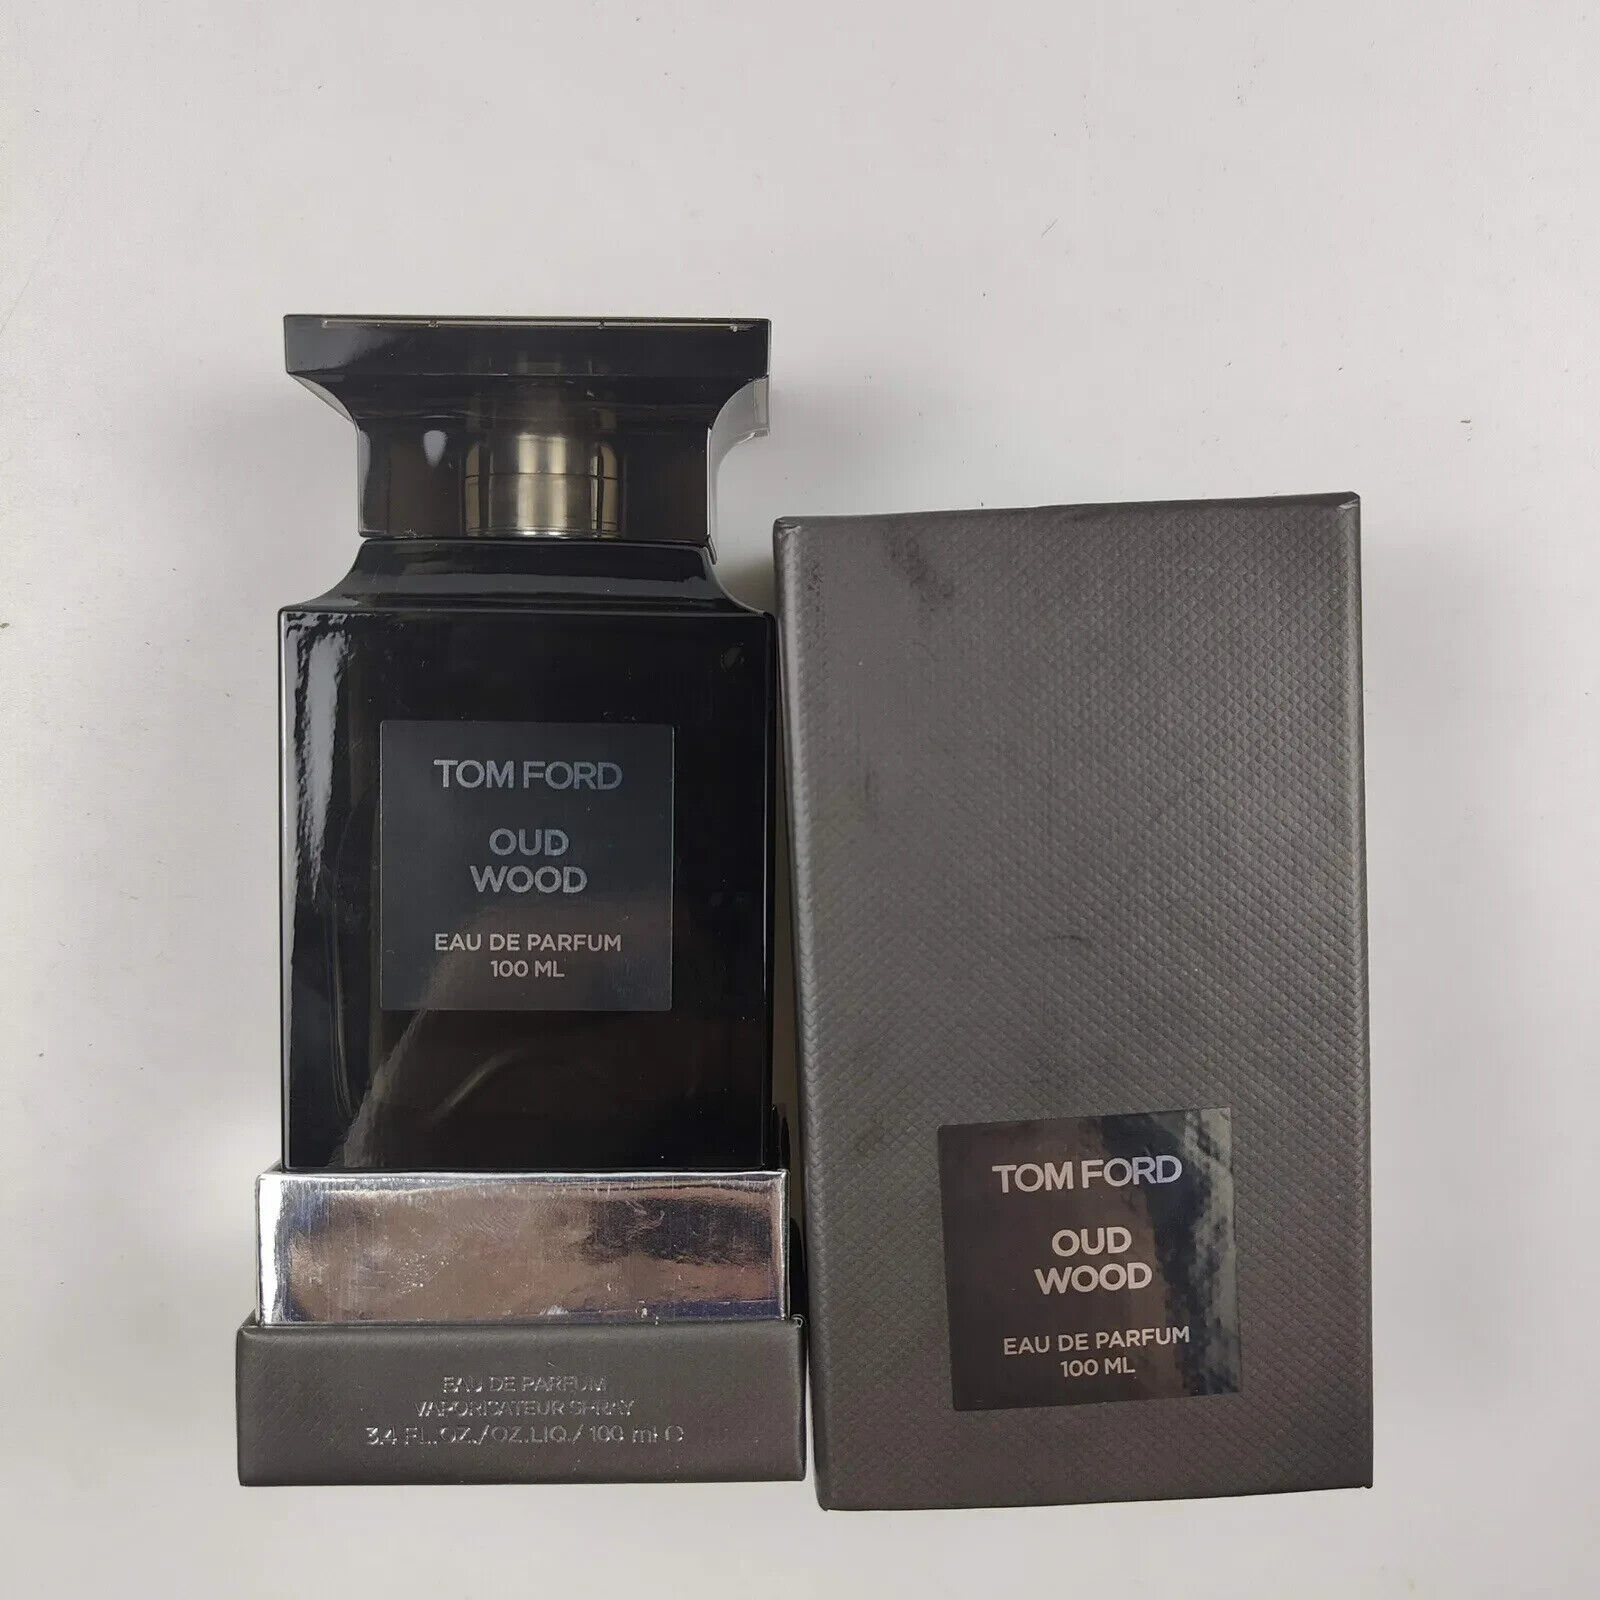 NEWTom. *Ford. Private Blend Oud Wood Eau De Parfum Spray - 100ml/3.4 oz,Black